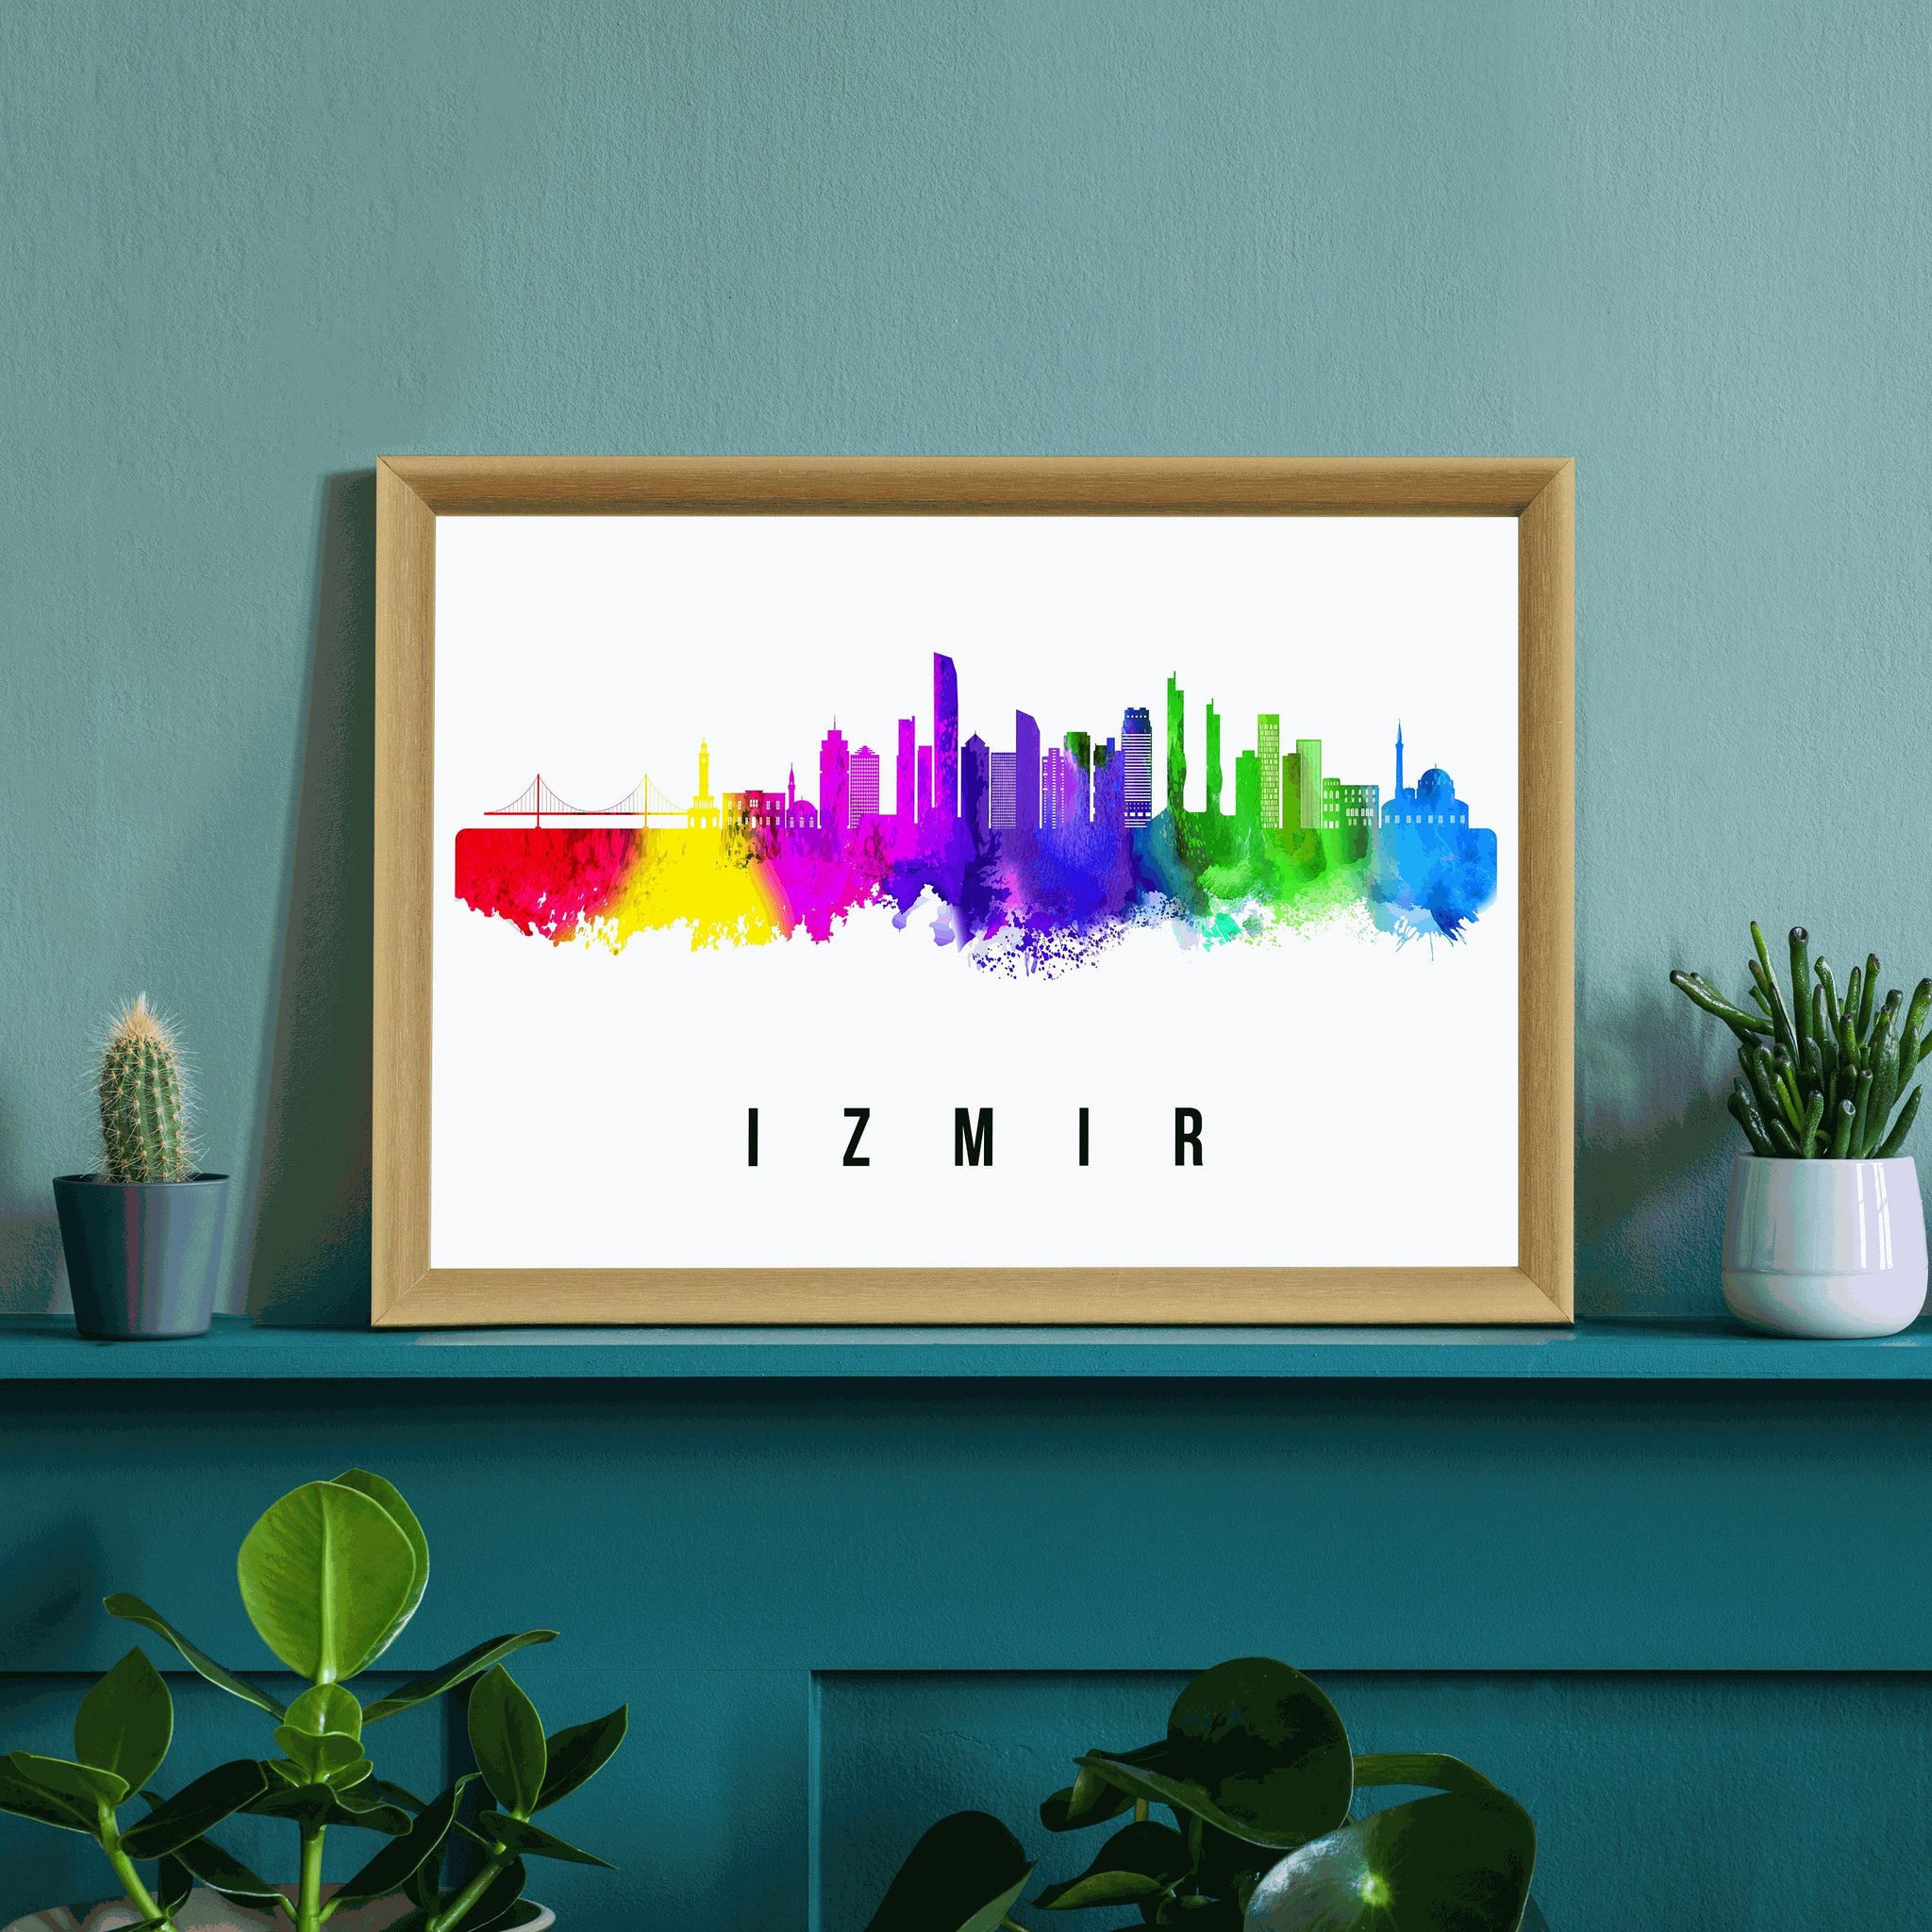 IZMIR - TURKEY Poster, Skyline Poster Cityscape and Landmark Izmir City Illustration Home Wall Art, Office Decor